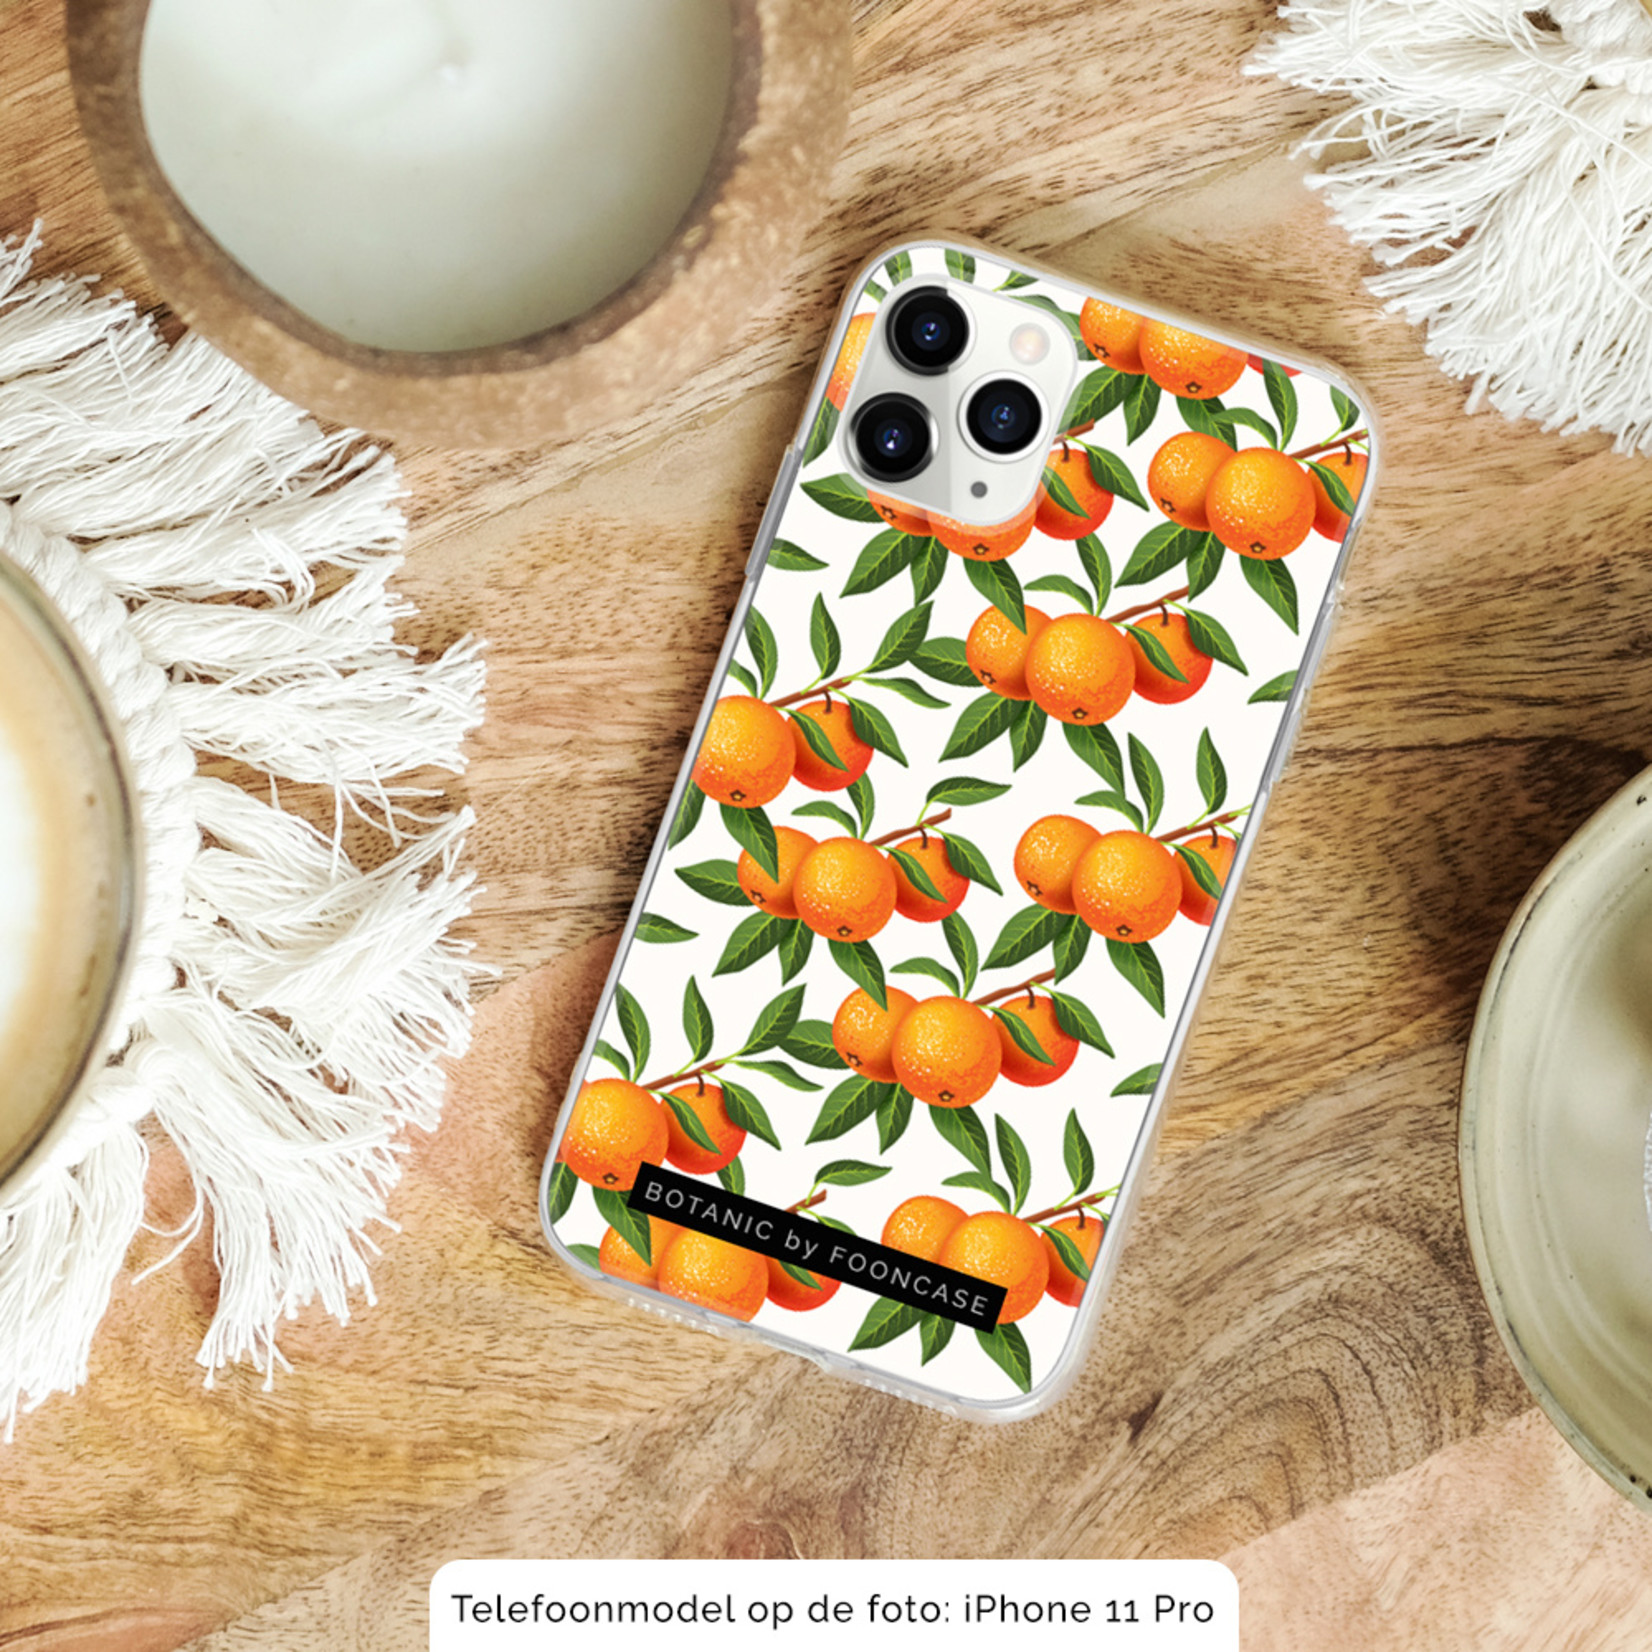 FOONCASE Iphone XR Cover - Botanic Manderin